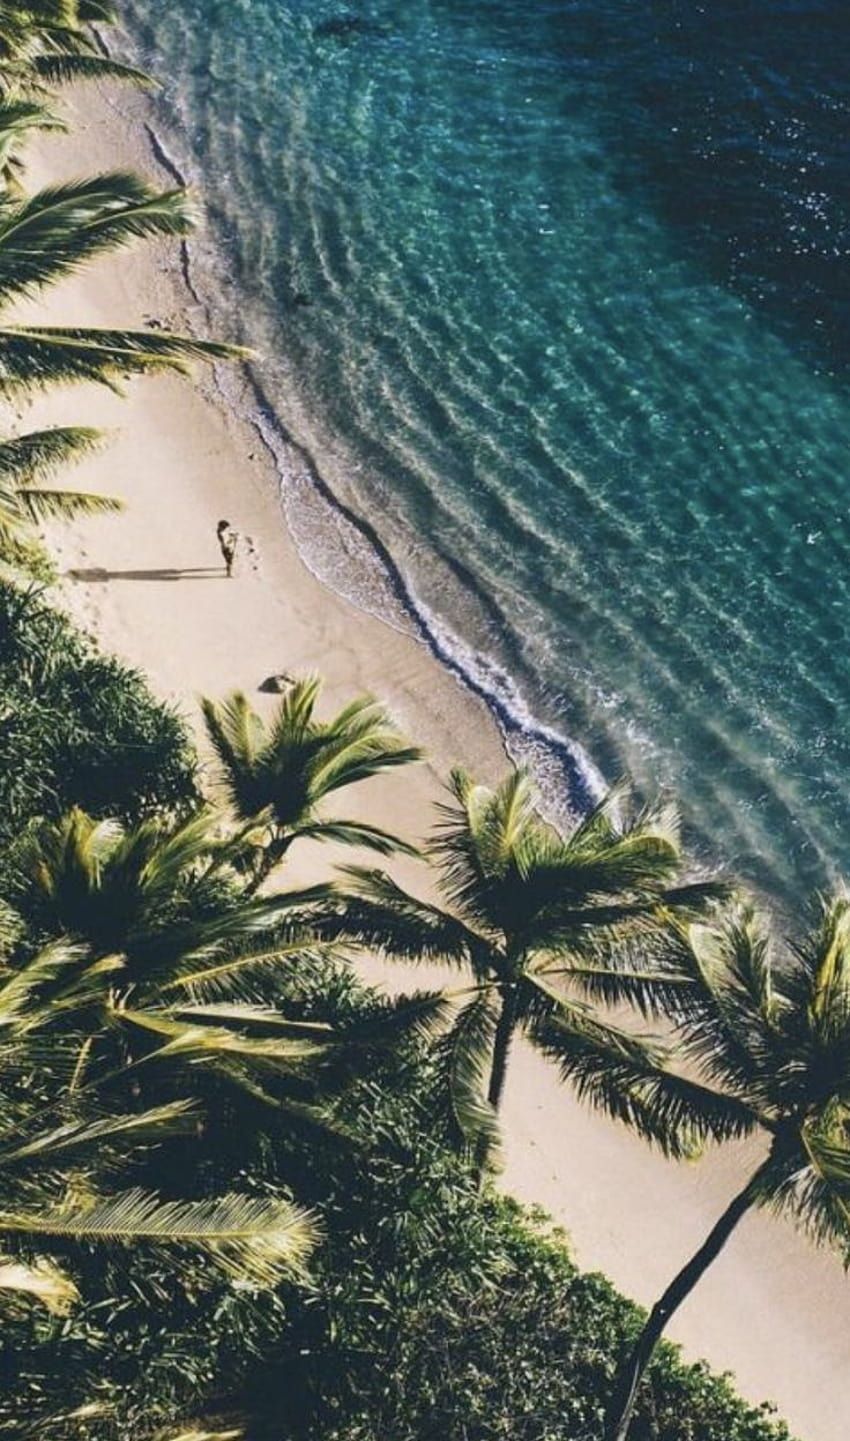 A beach with palm trees and the ocean - Hawaii, tropical, beach, coast